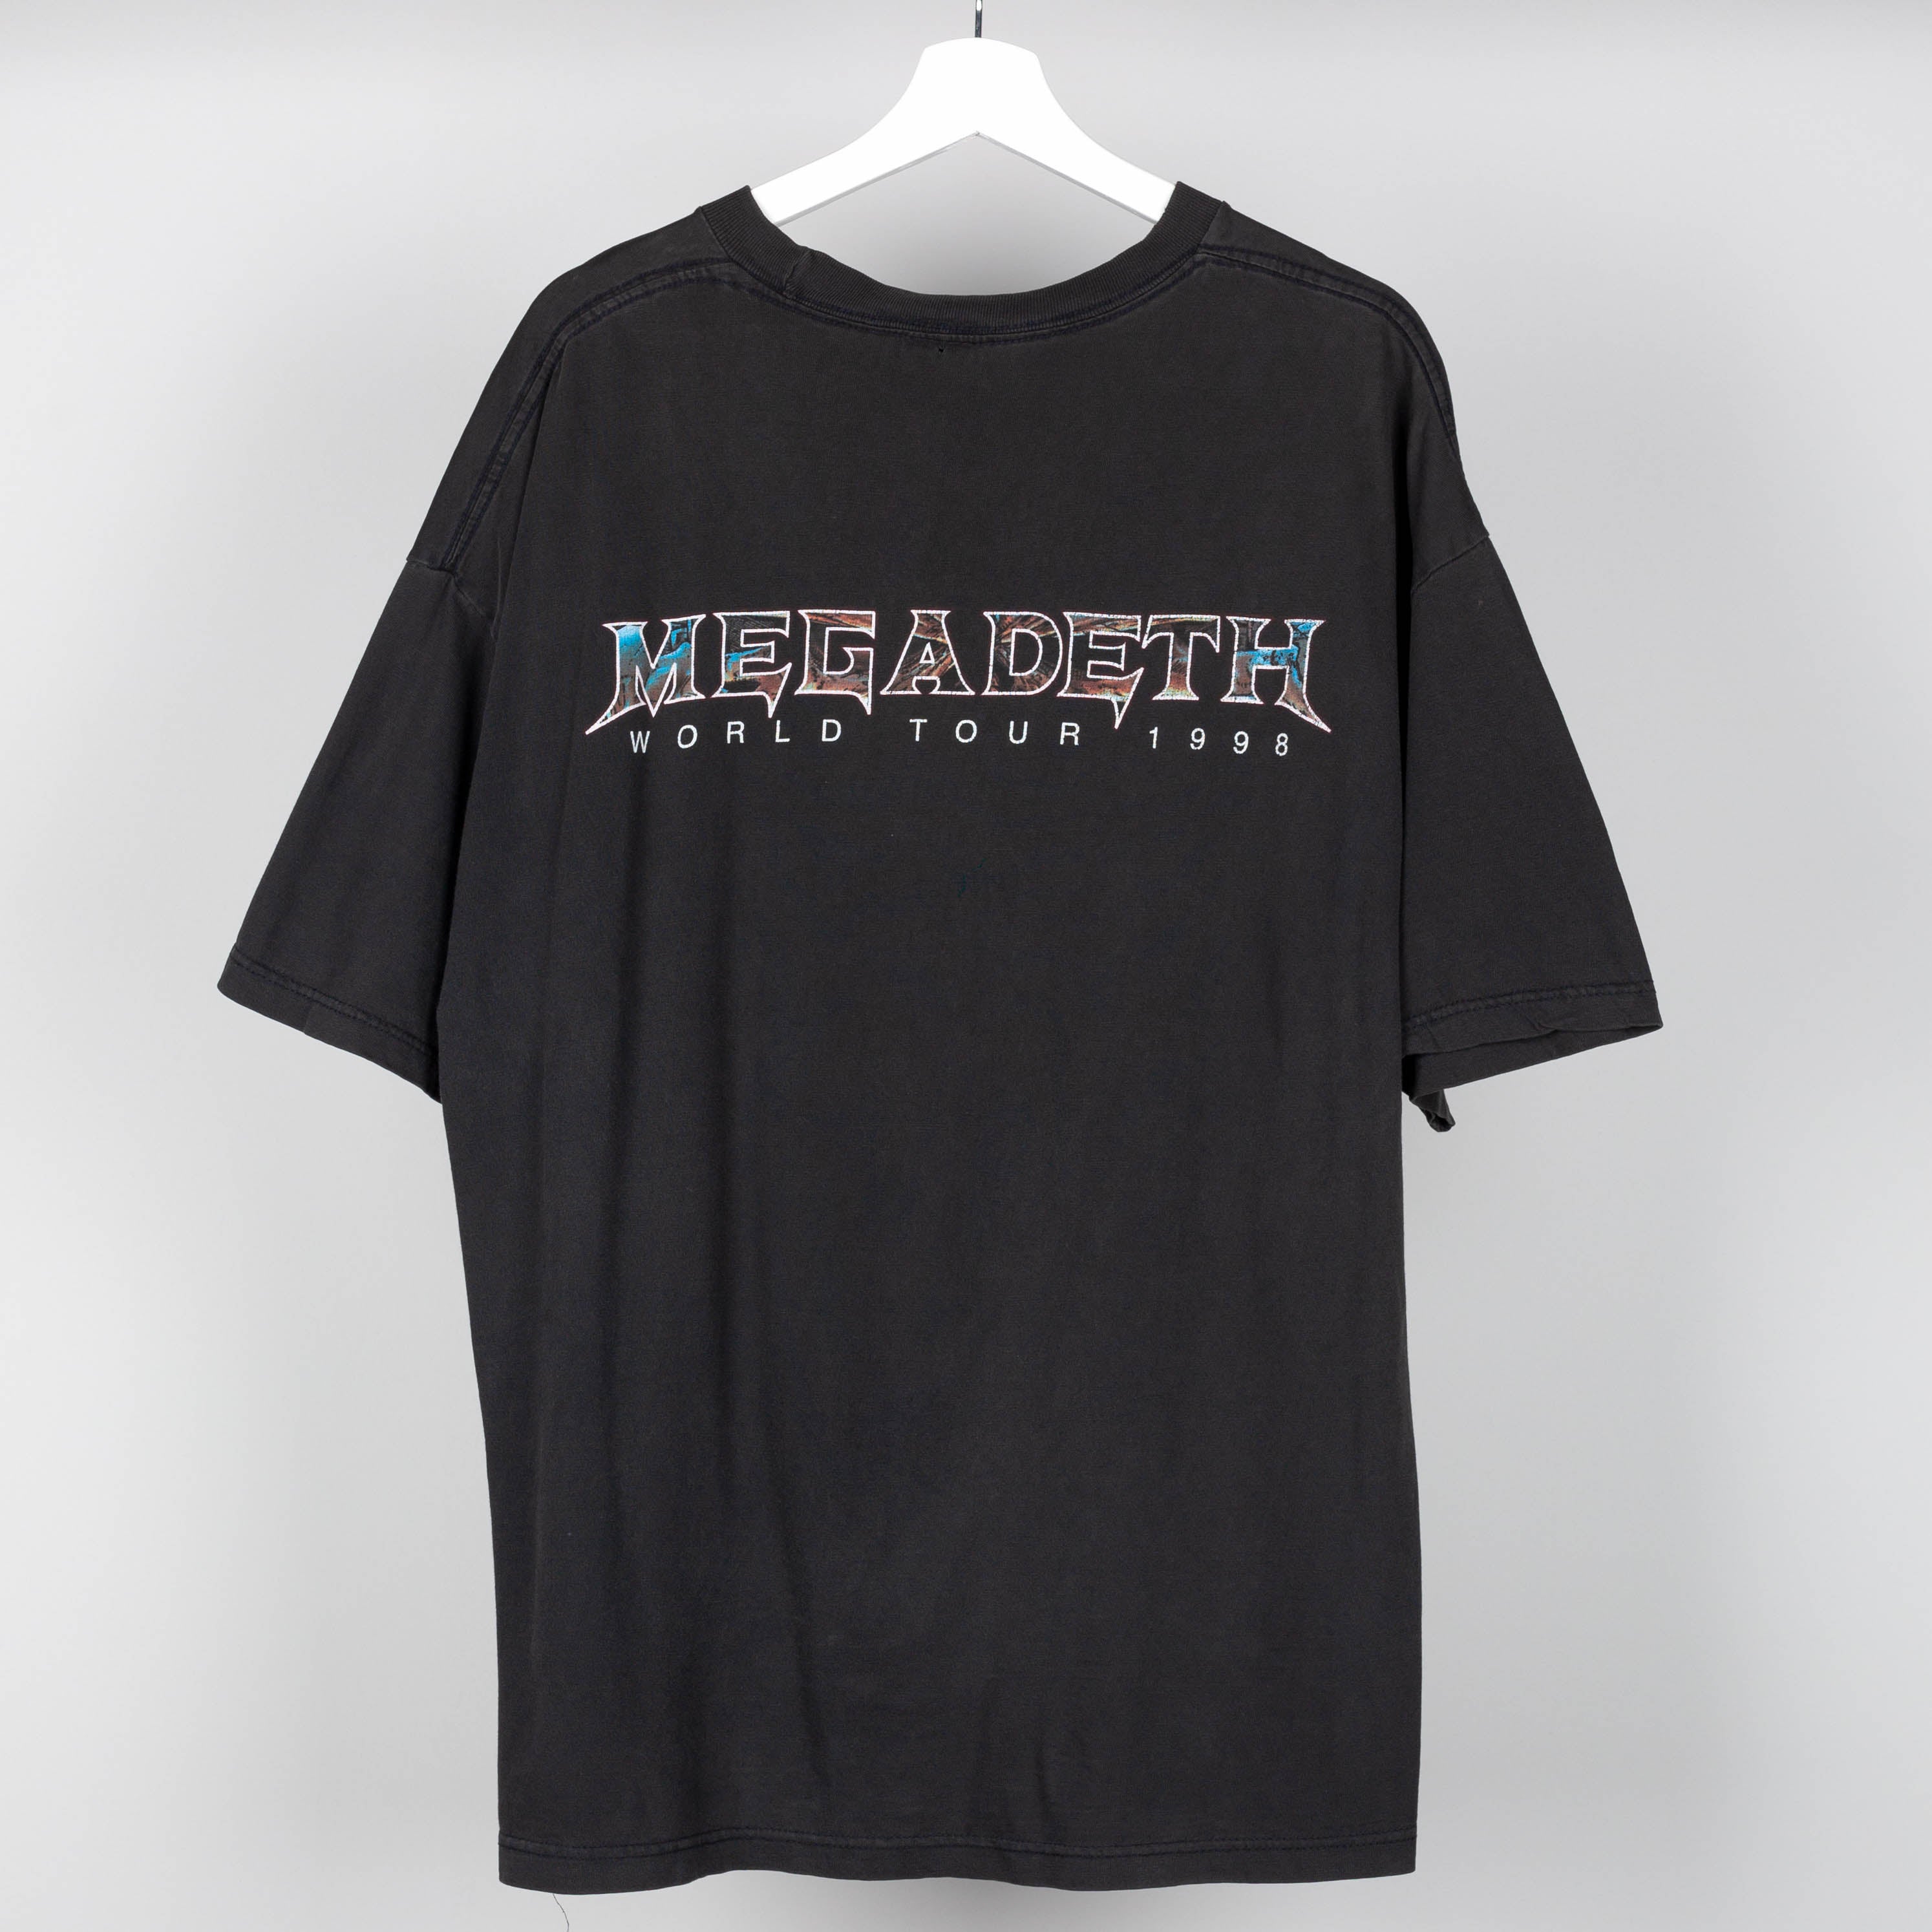 1998 Megadeath T-Shirt Size XL